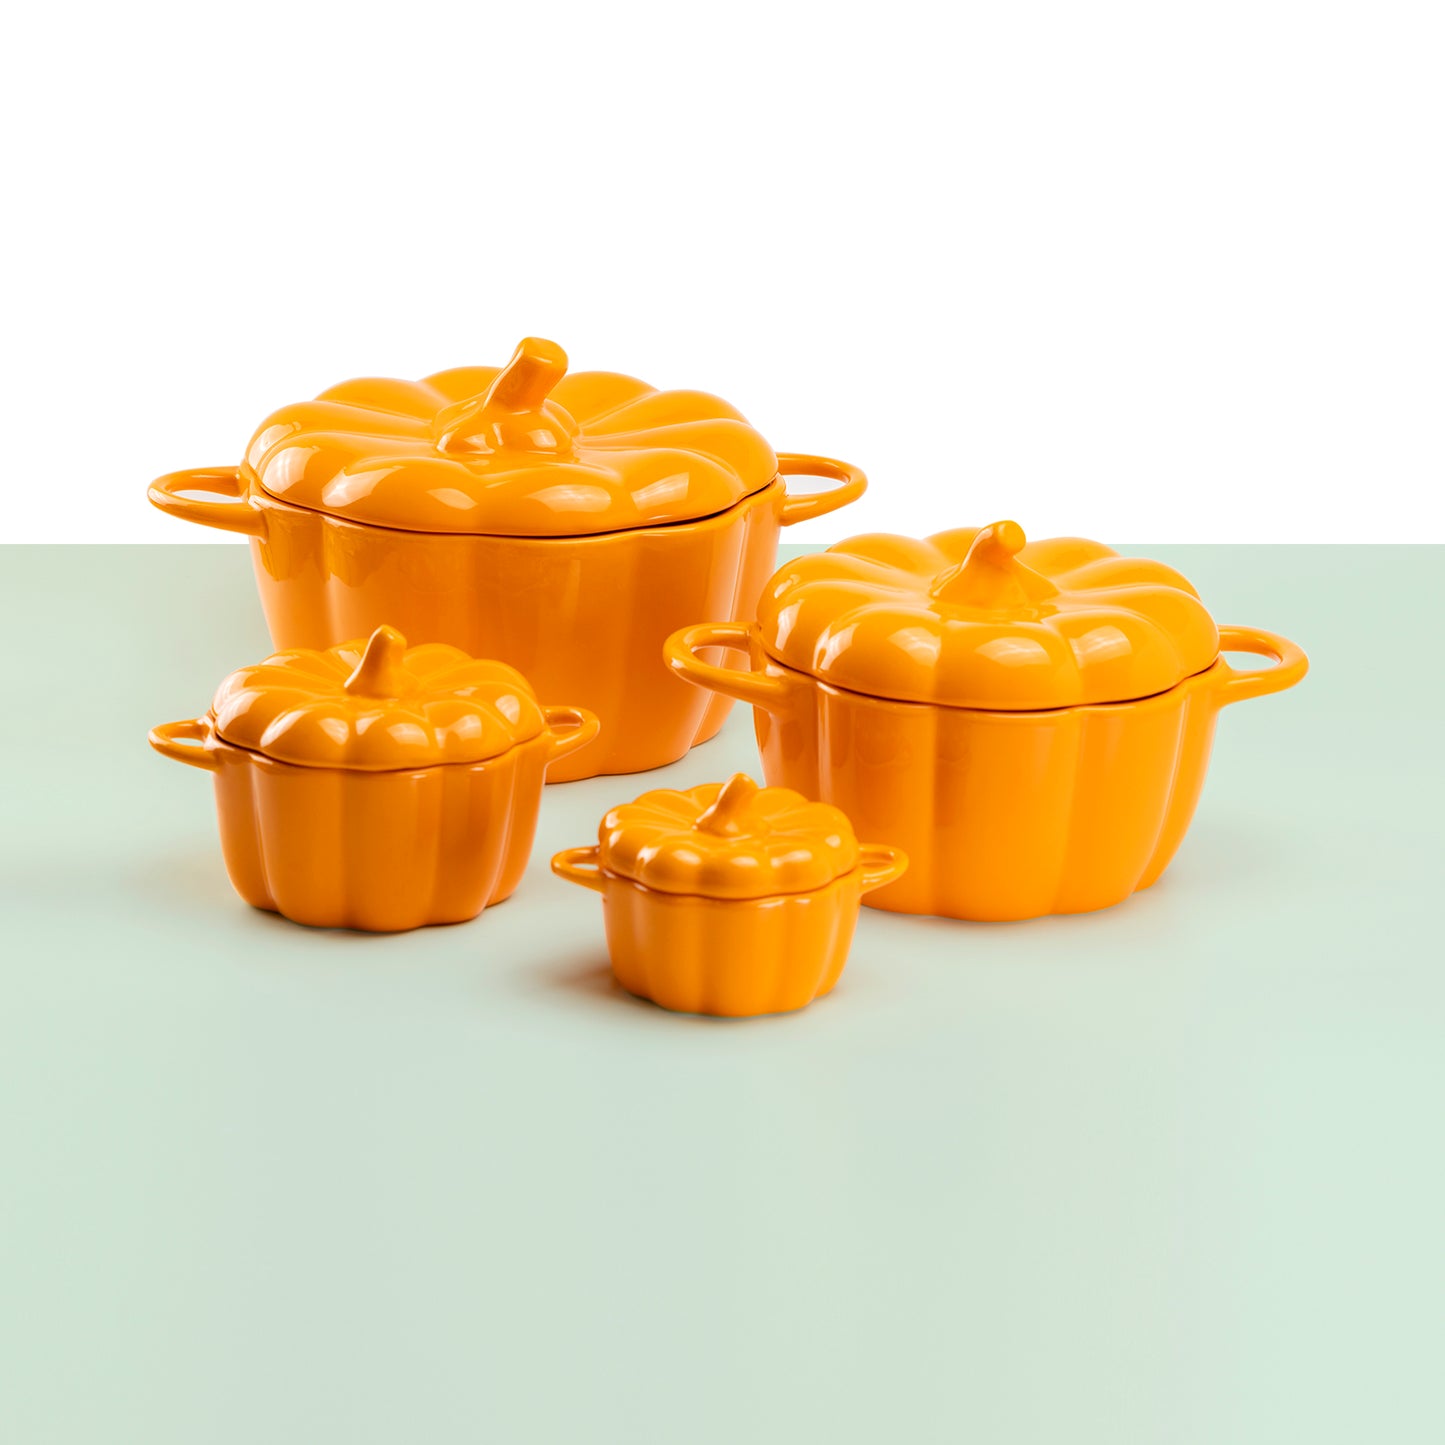 orange pumpkin serving bowls with lids